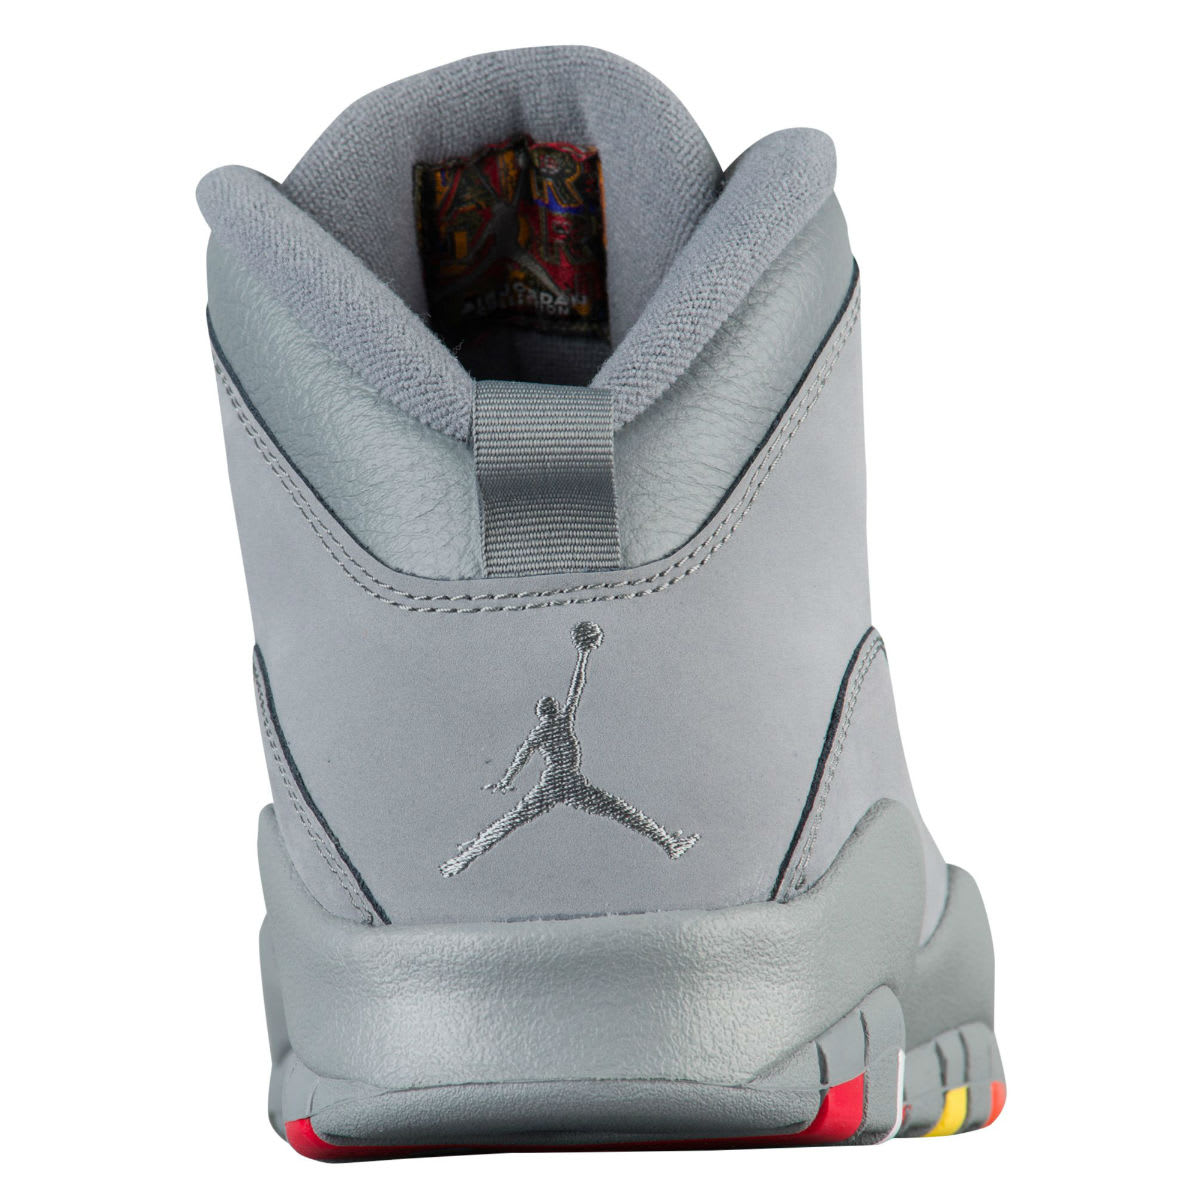 Air Jordan 10 X Cool Grey Release Date 310805-022 Heel